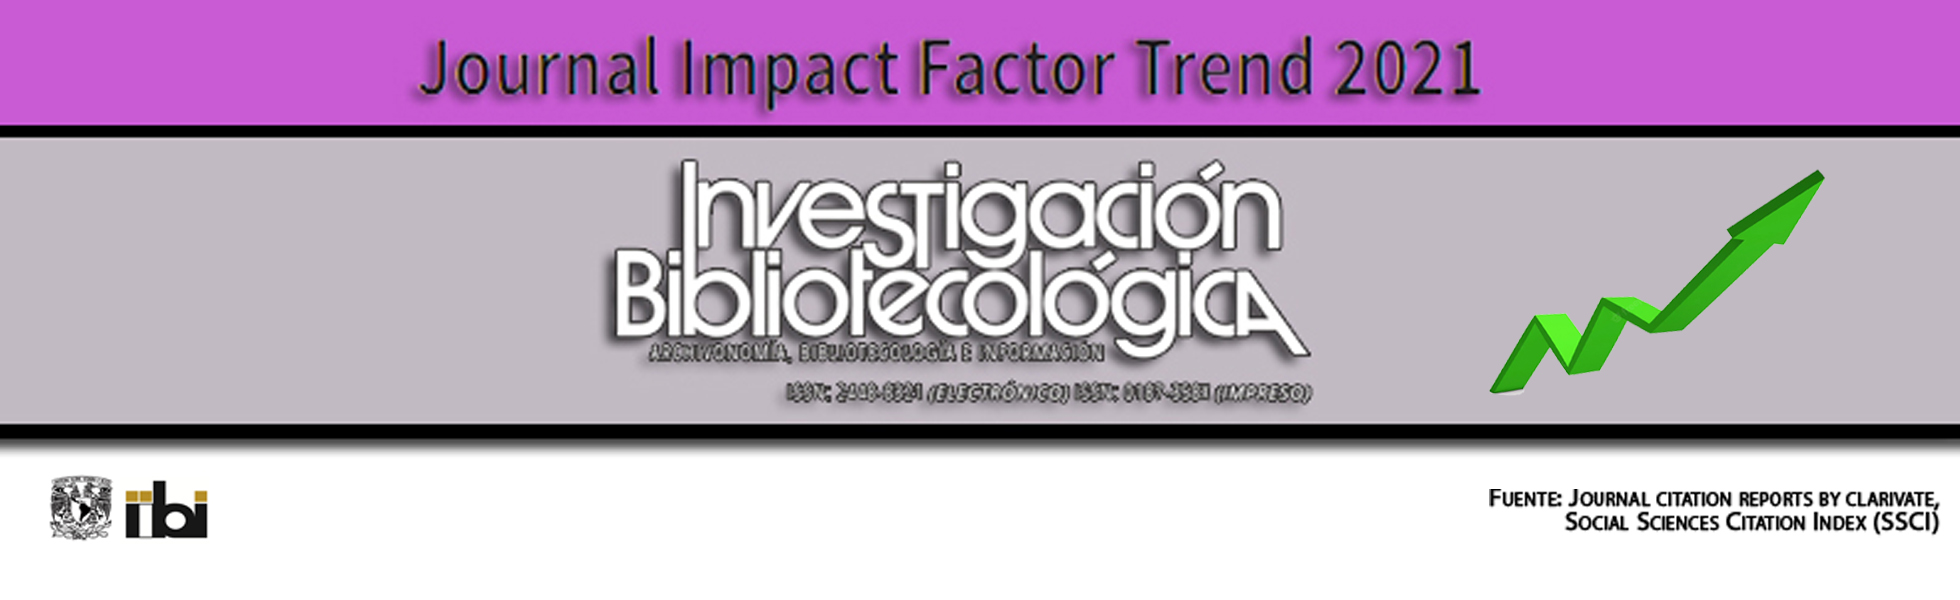 Journal Impact Factor Trend 2021 RIB